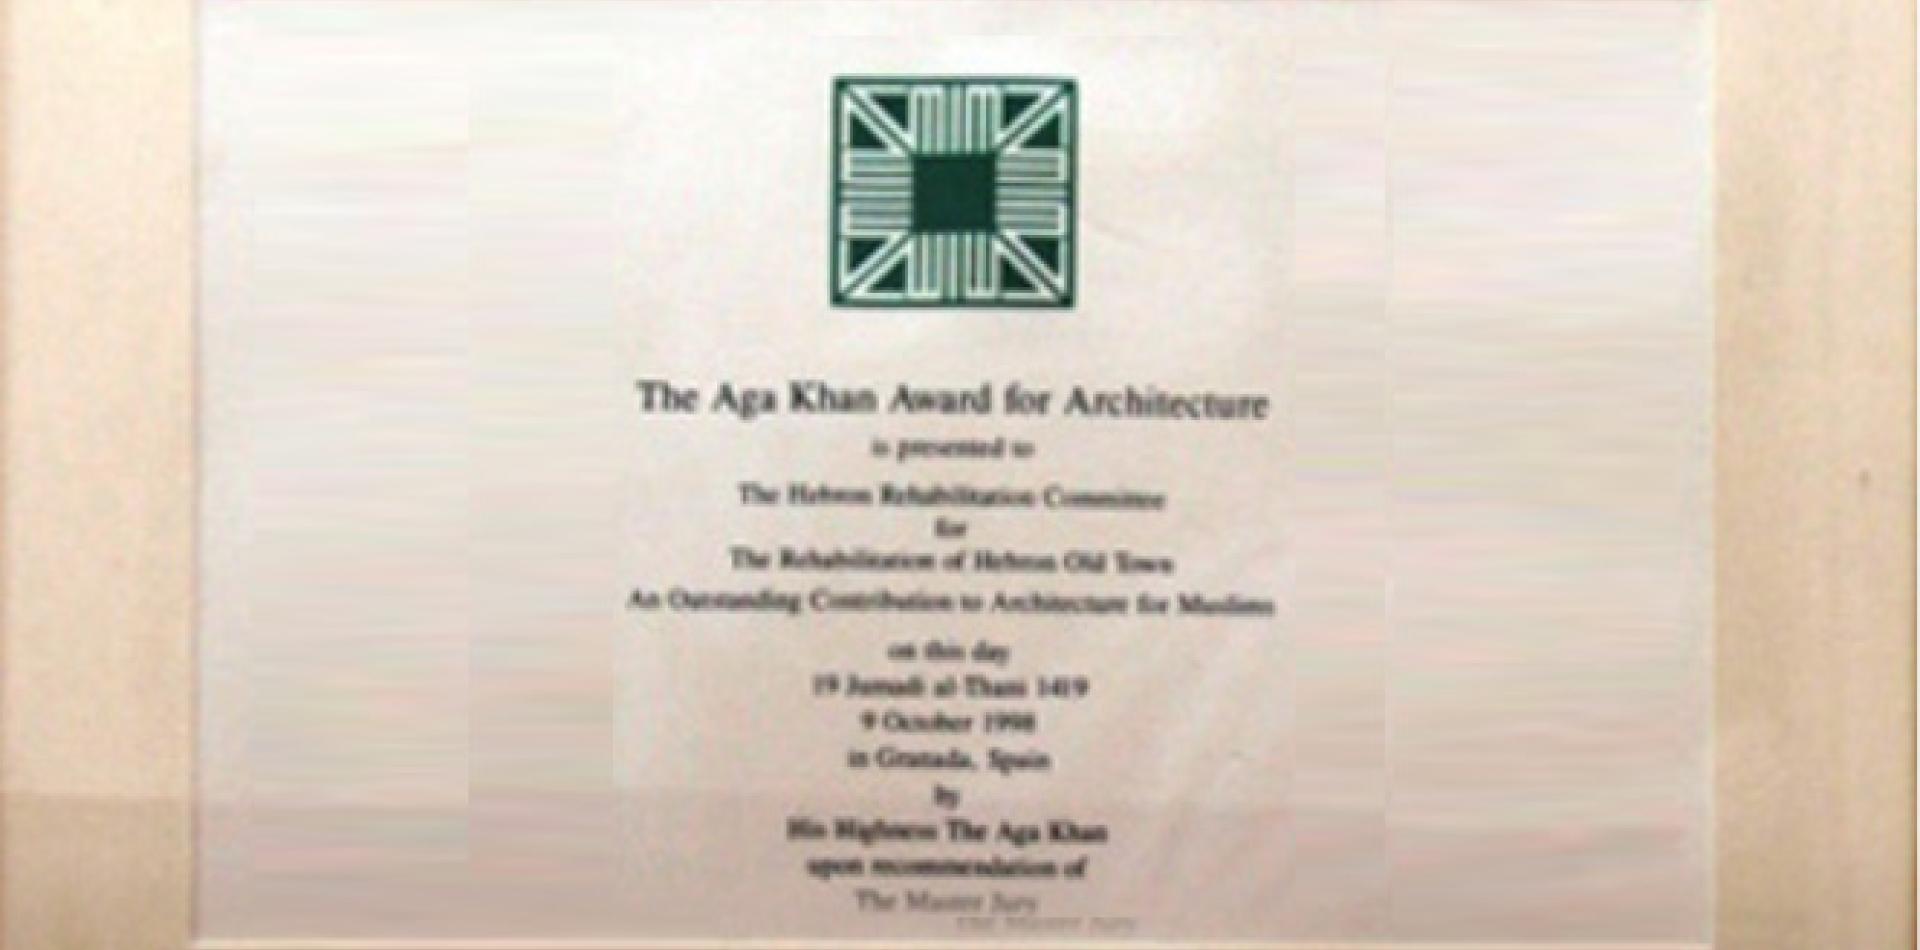 Agha Khan Award